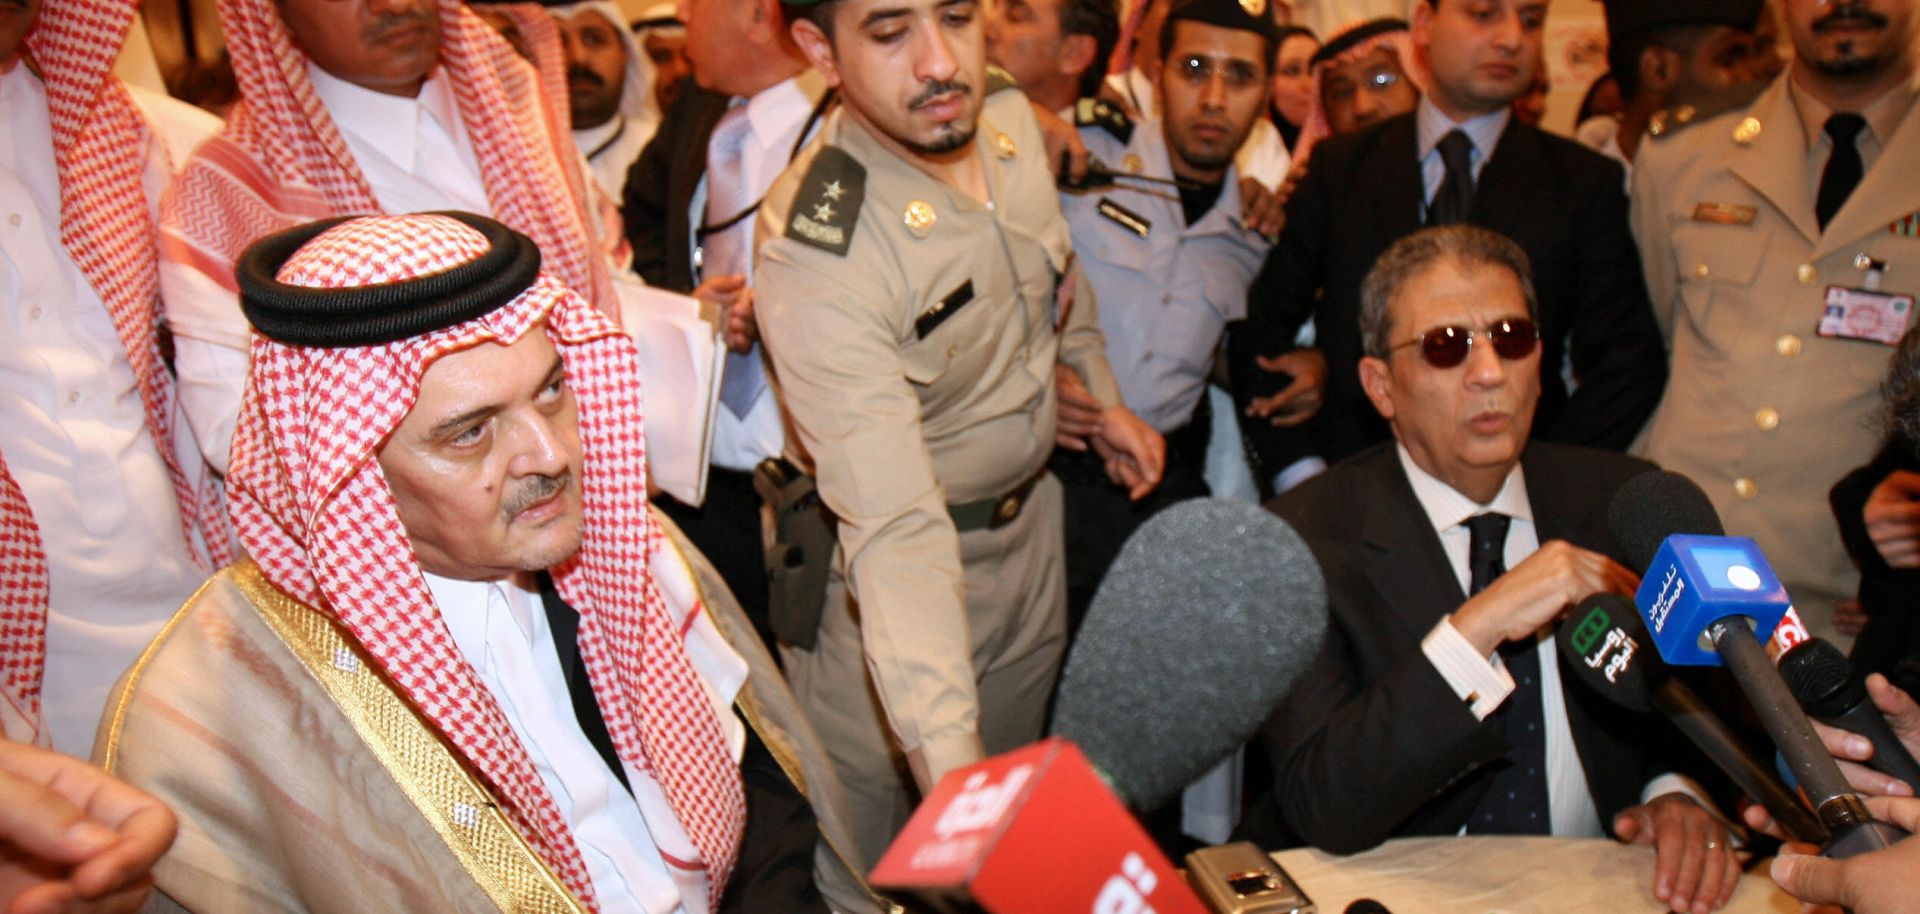 Saudi Foreign Minister Prince Saud al-Faisal and Arab League Secretary General Amr Mussa speak to the media.